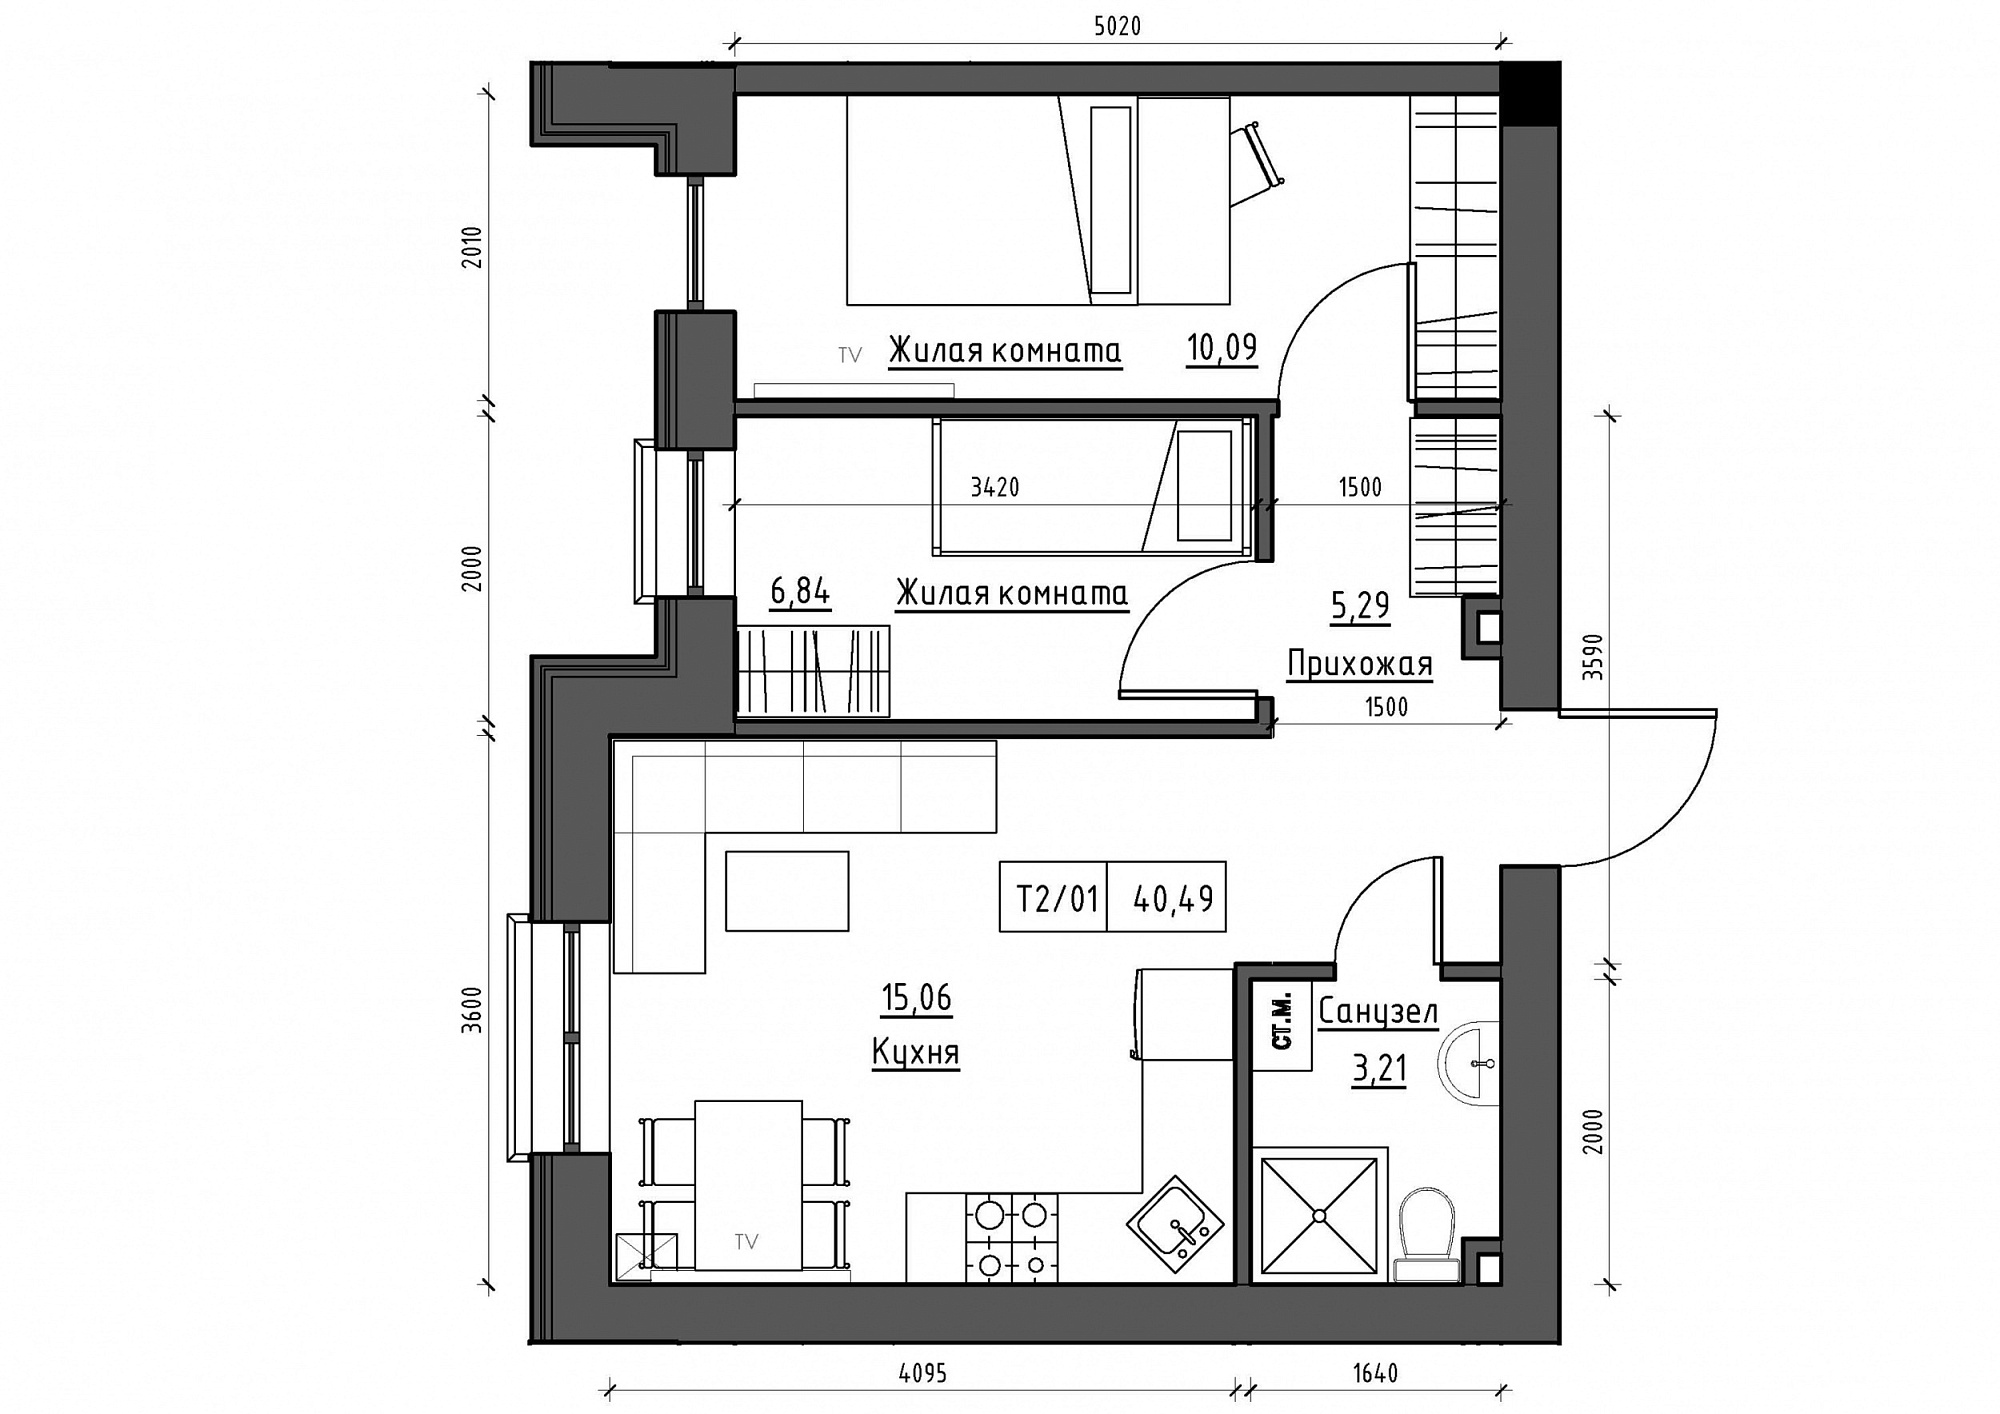 Planning 2-rm flats area 40.49m2, KS-012-01/0010.